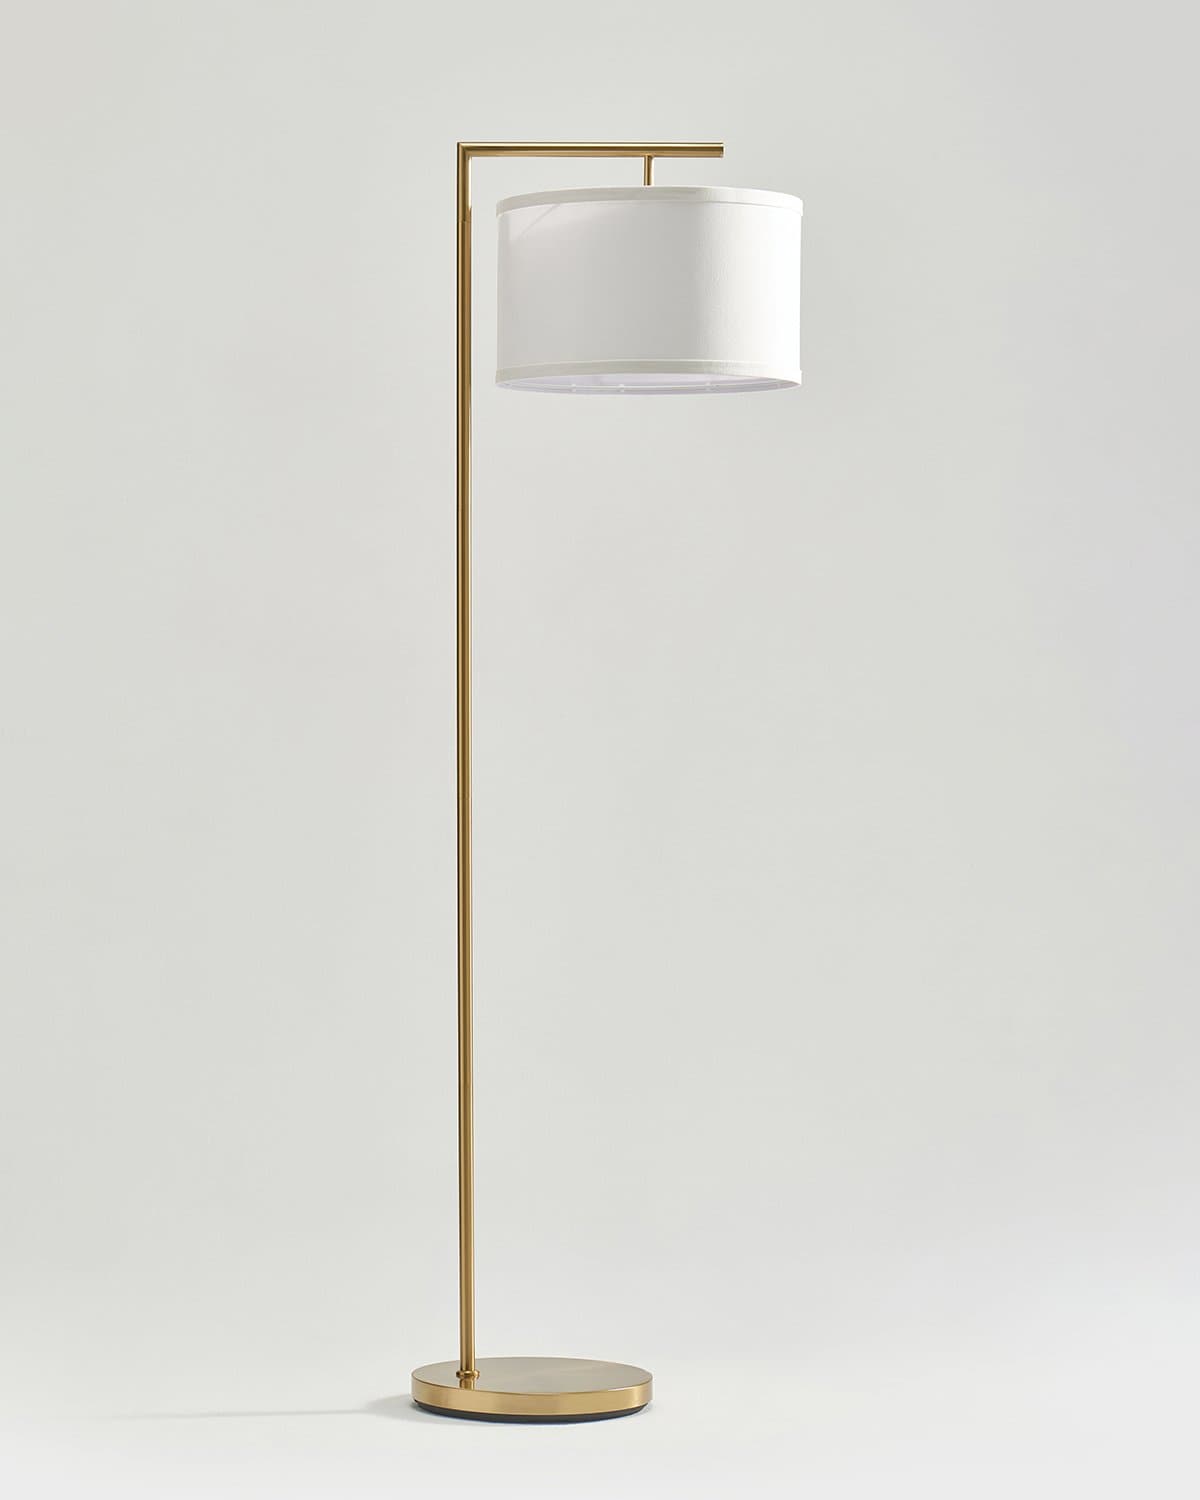 Montage Modern Floor Lamp